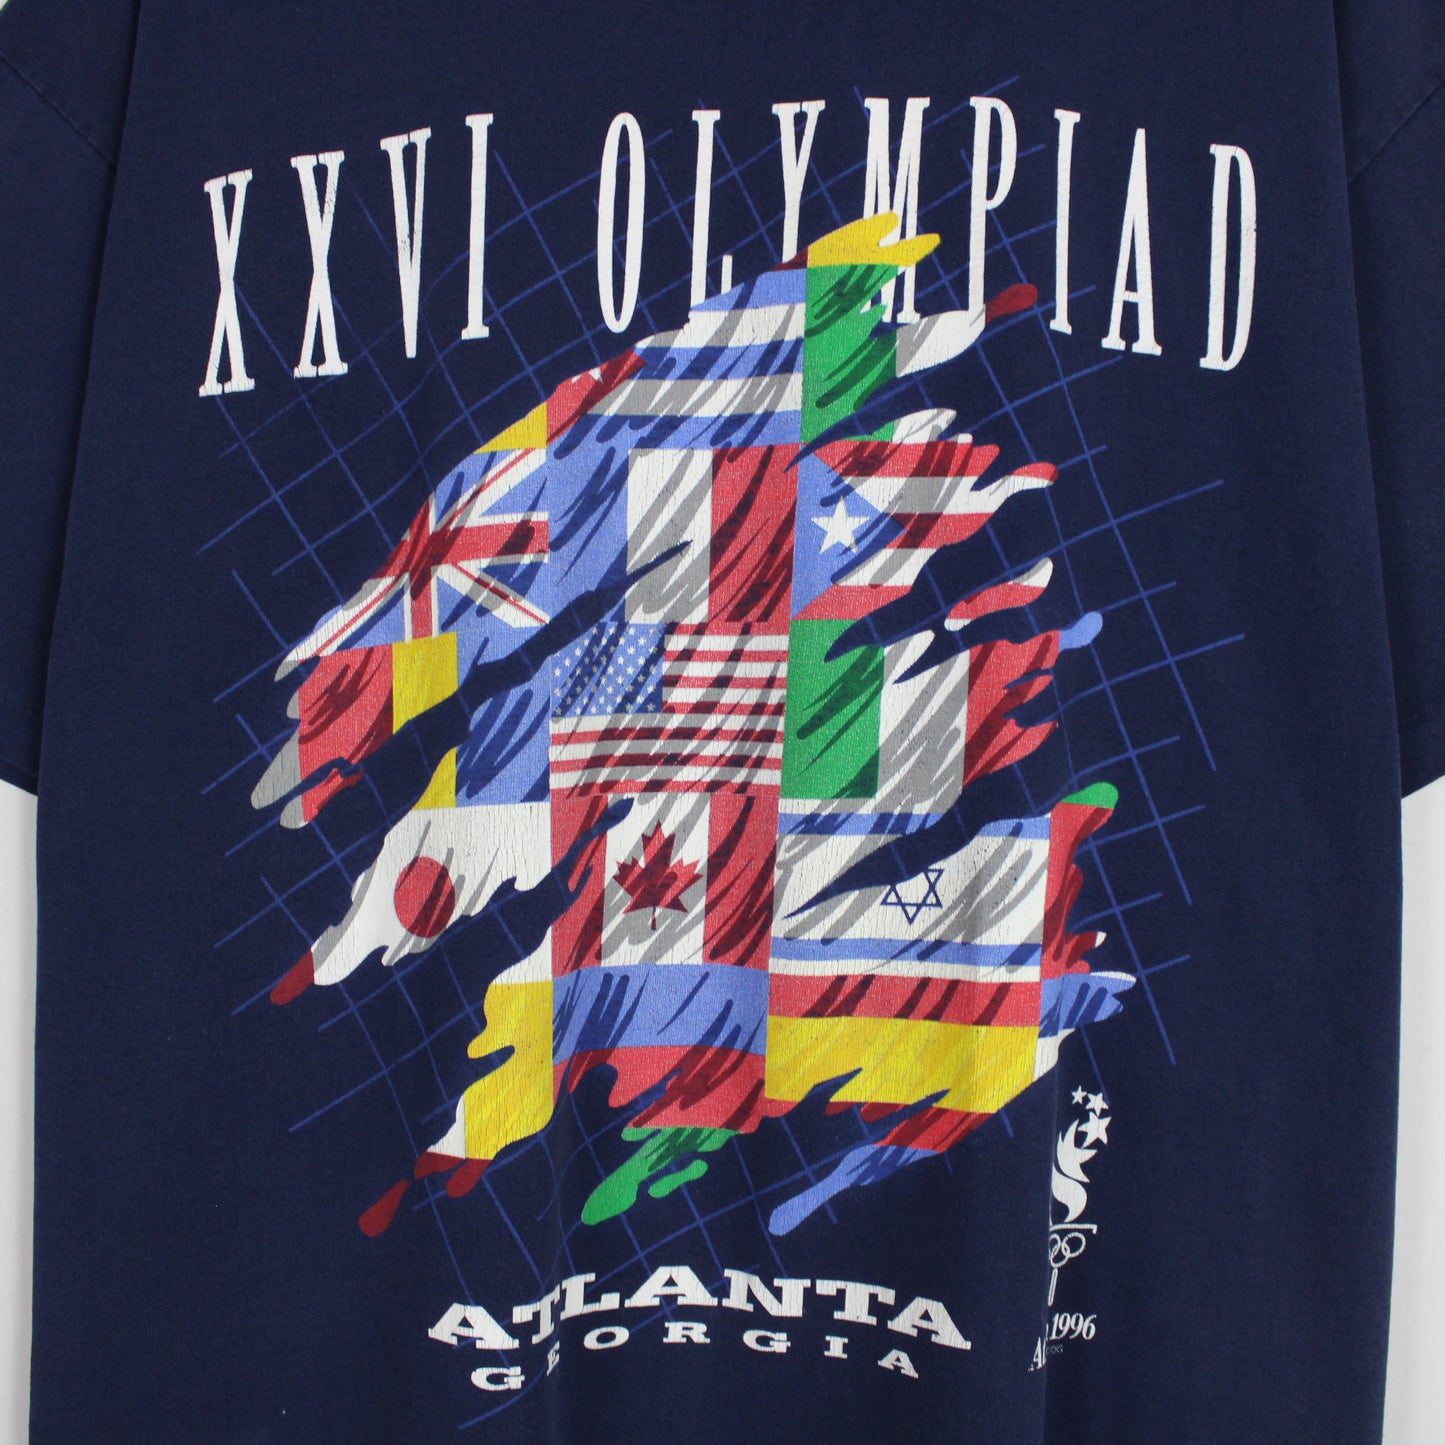 Vintage 1996 Atlanta Olympics Tee - XL